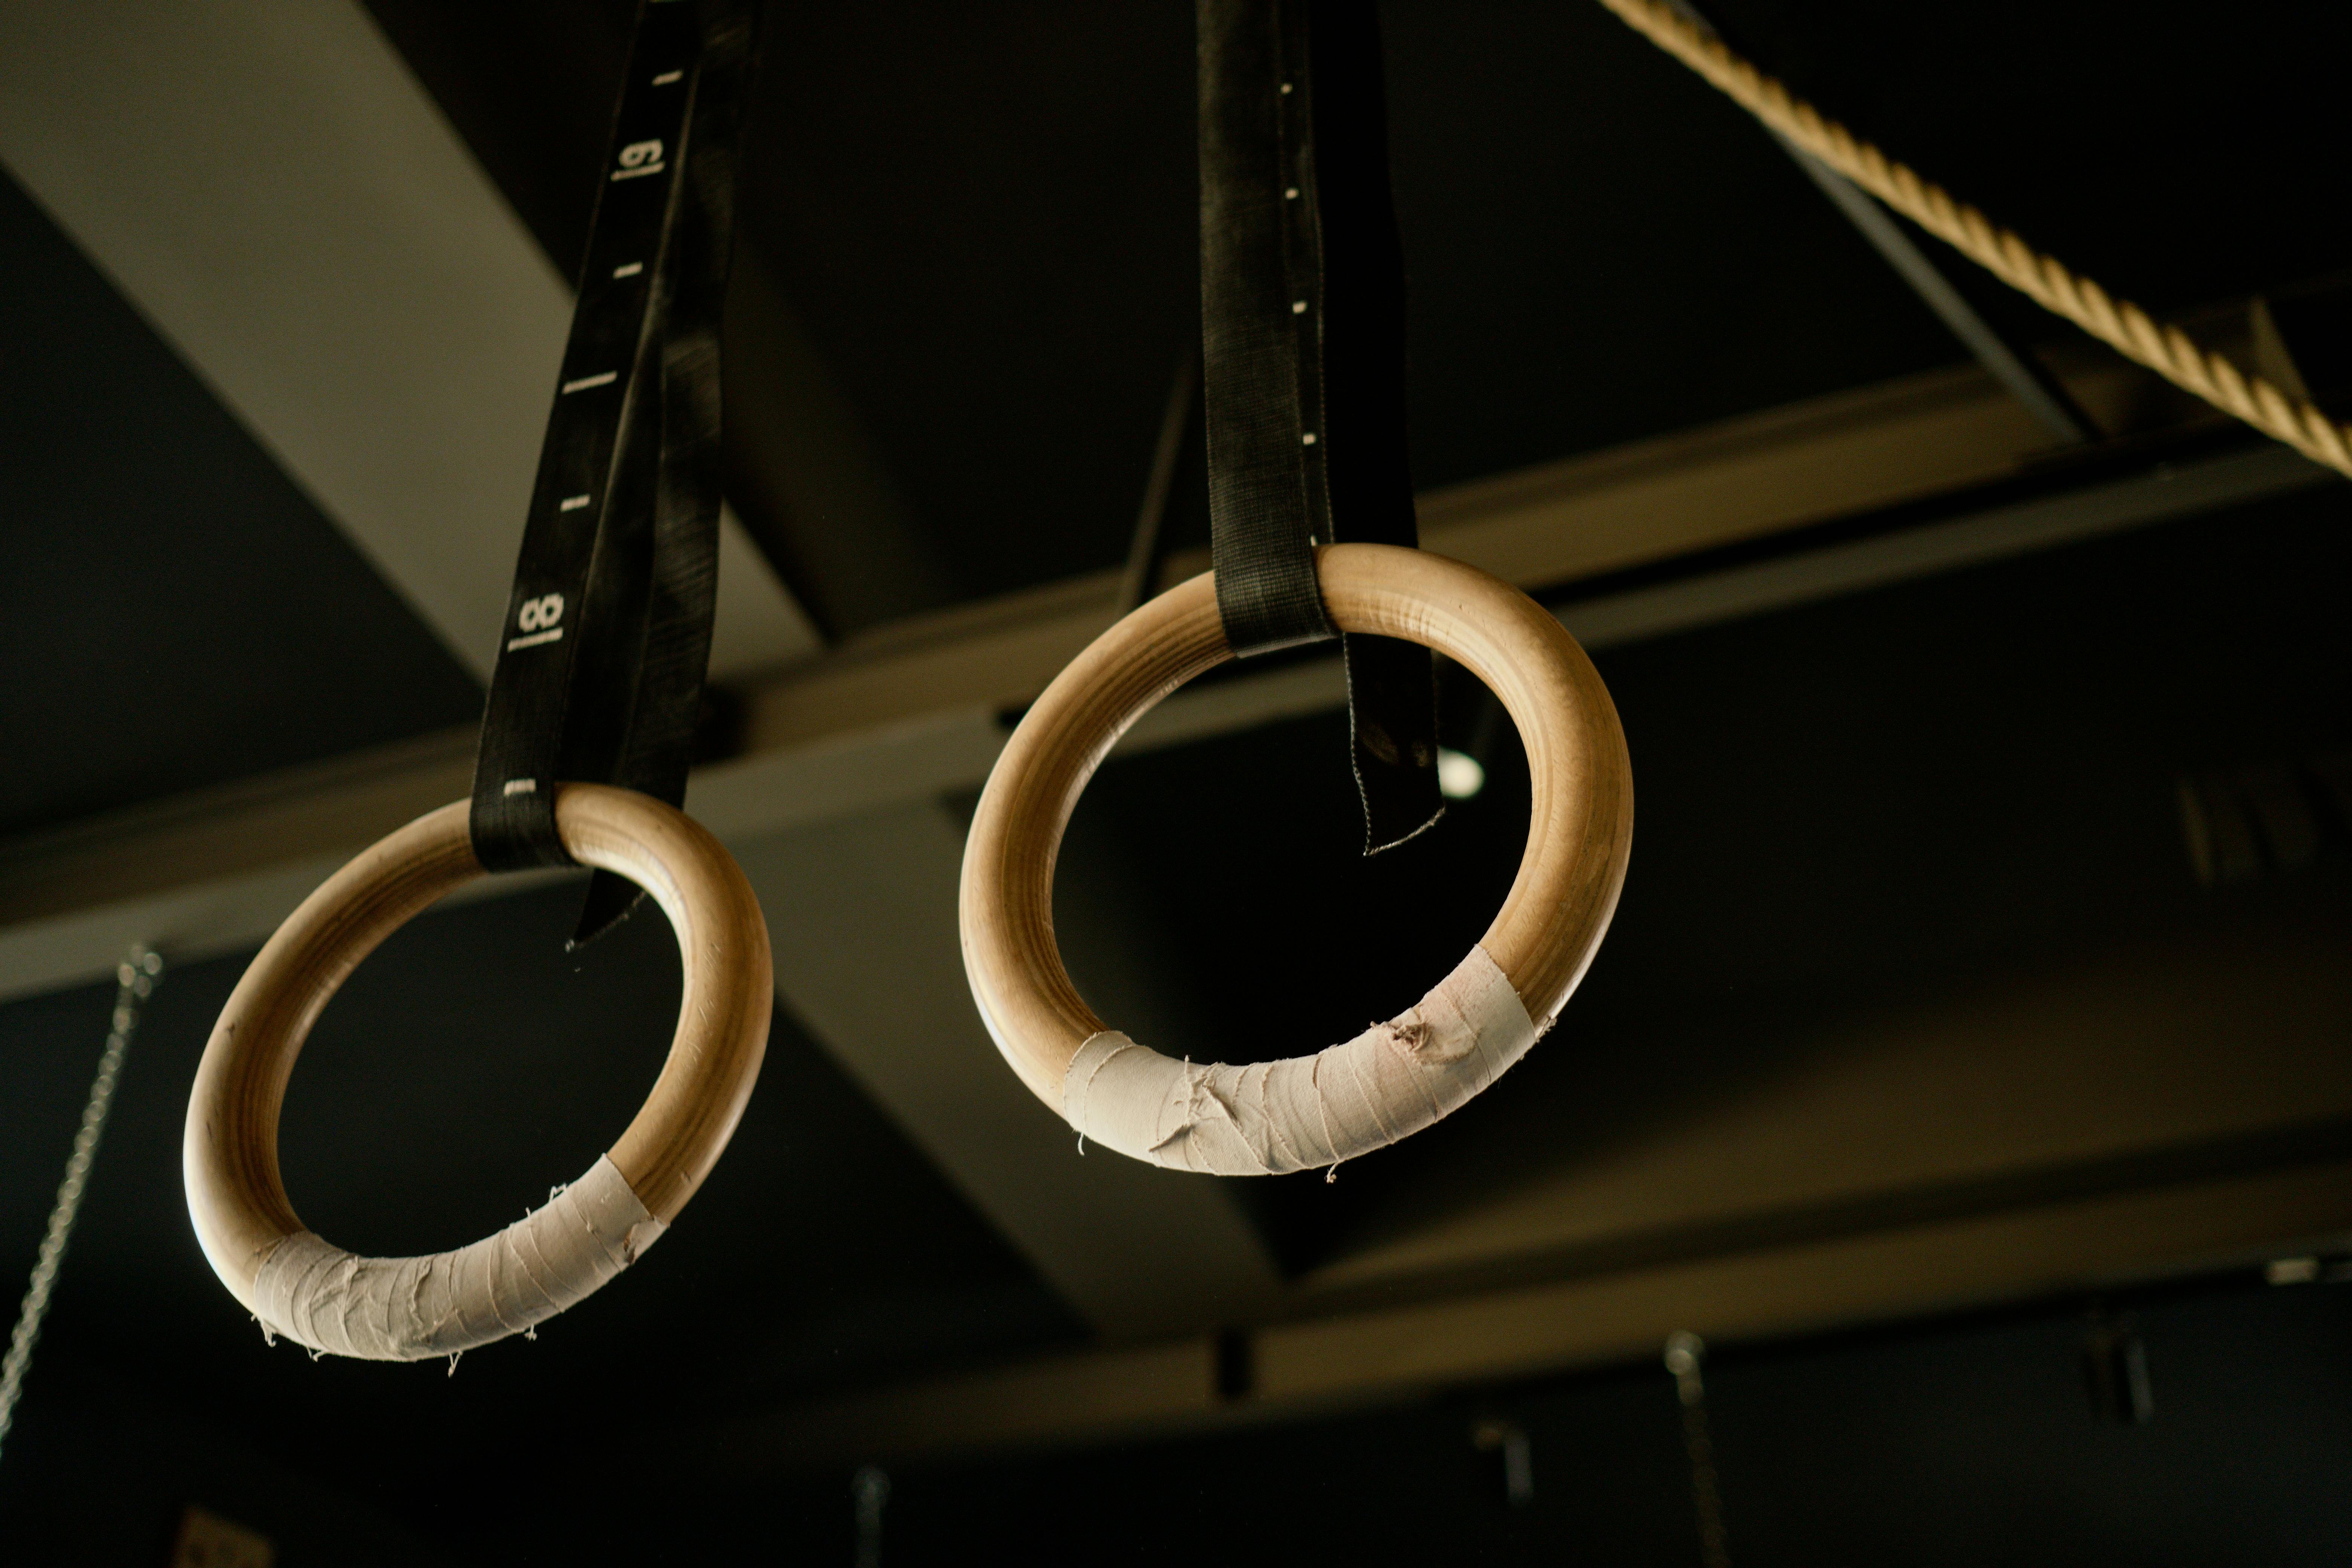 A pair of gymnastic rings